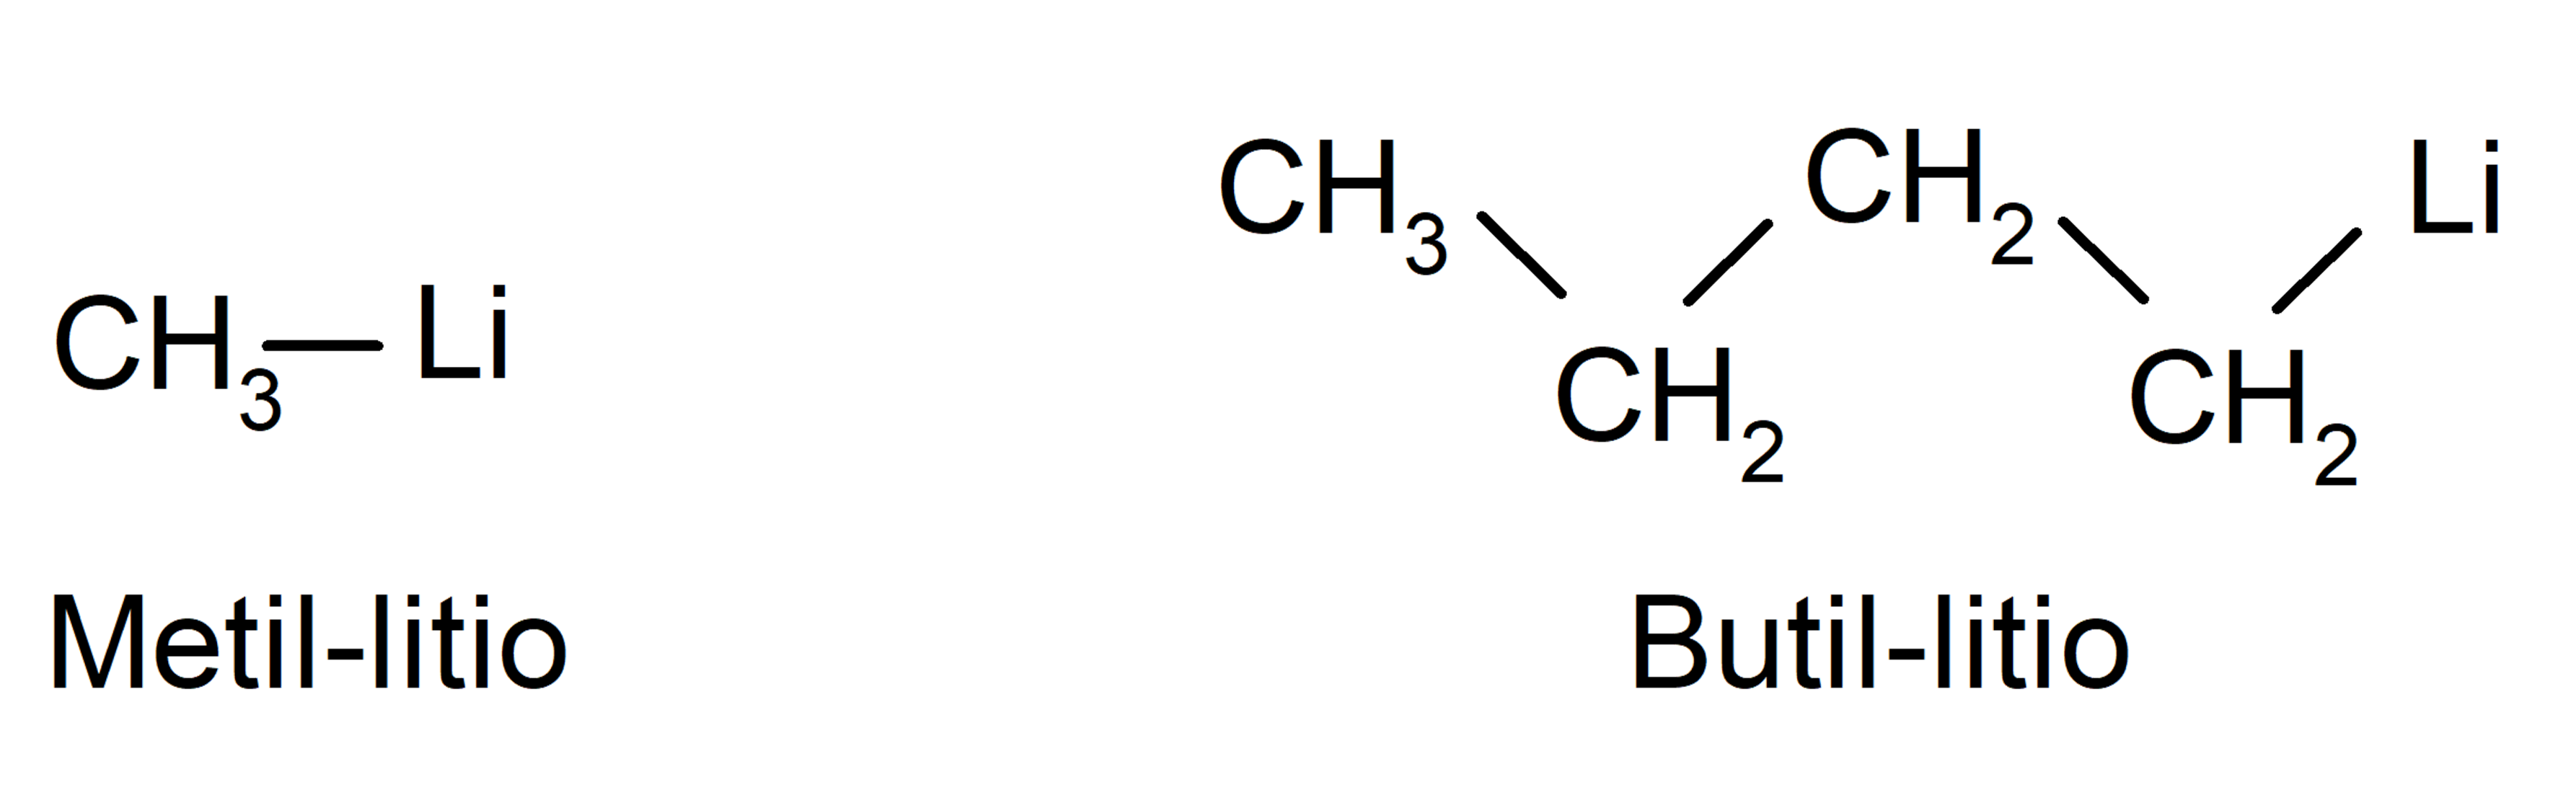 Química orgánica